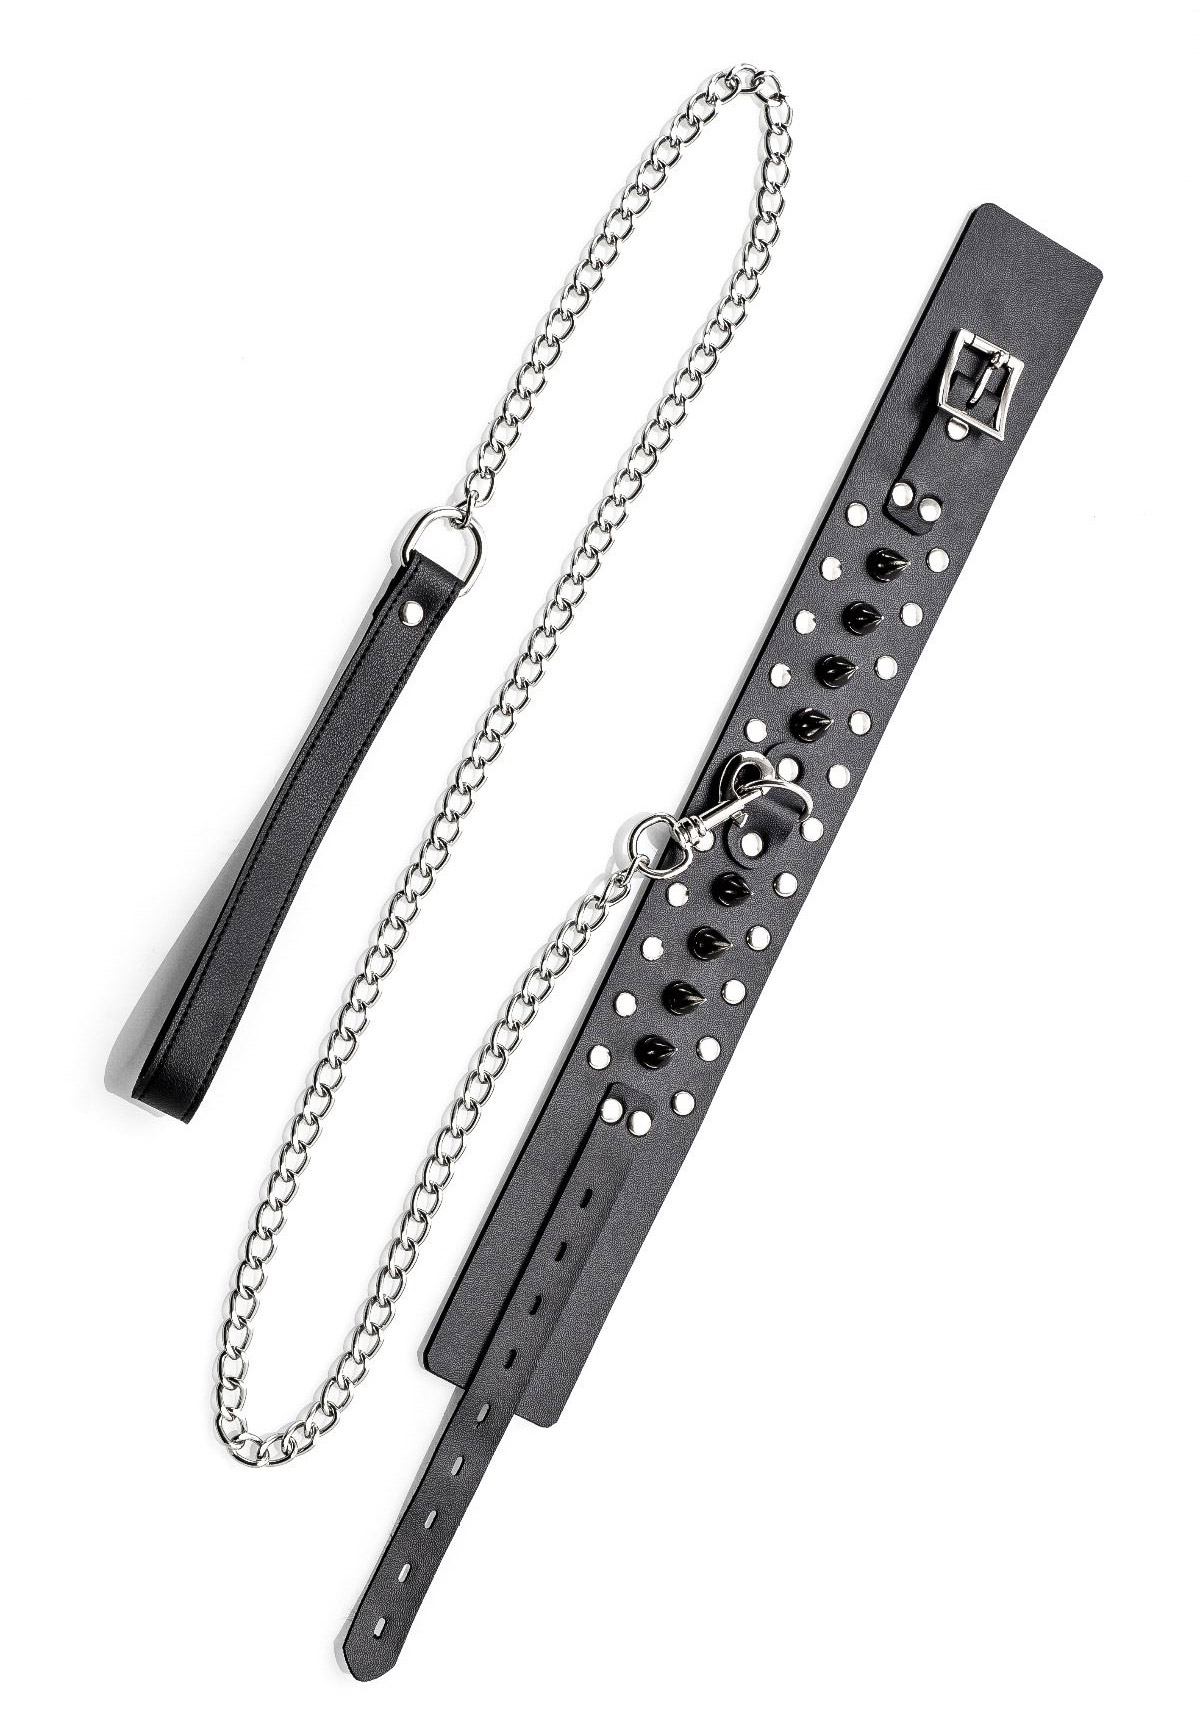 ZENN: Spiked Collar With Leash - Halsband & Leine